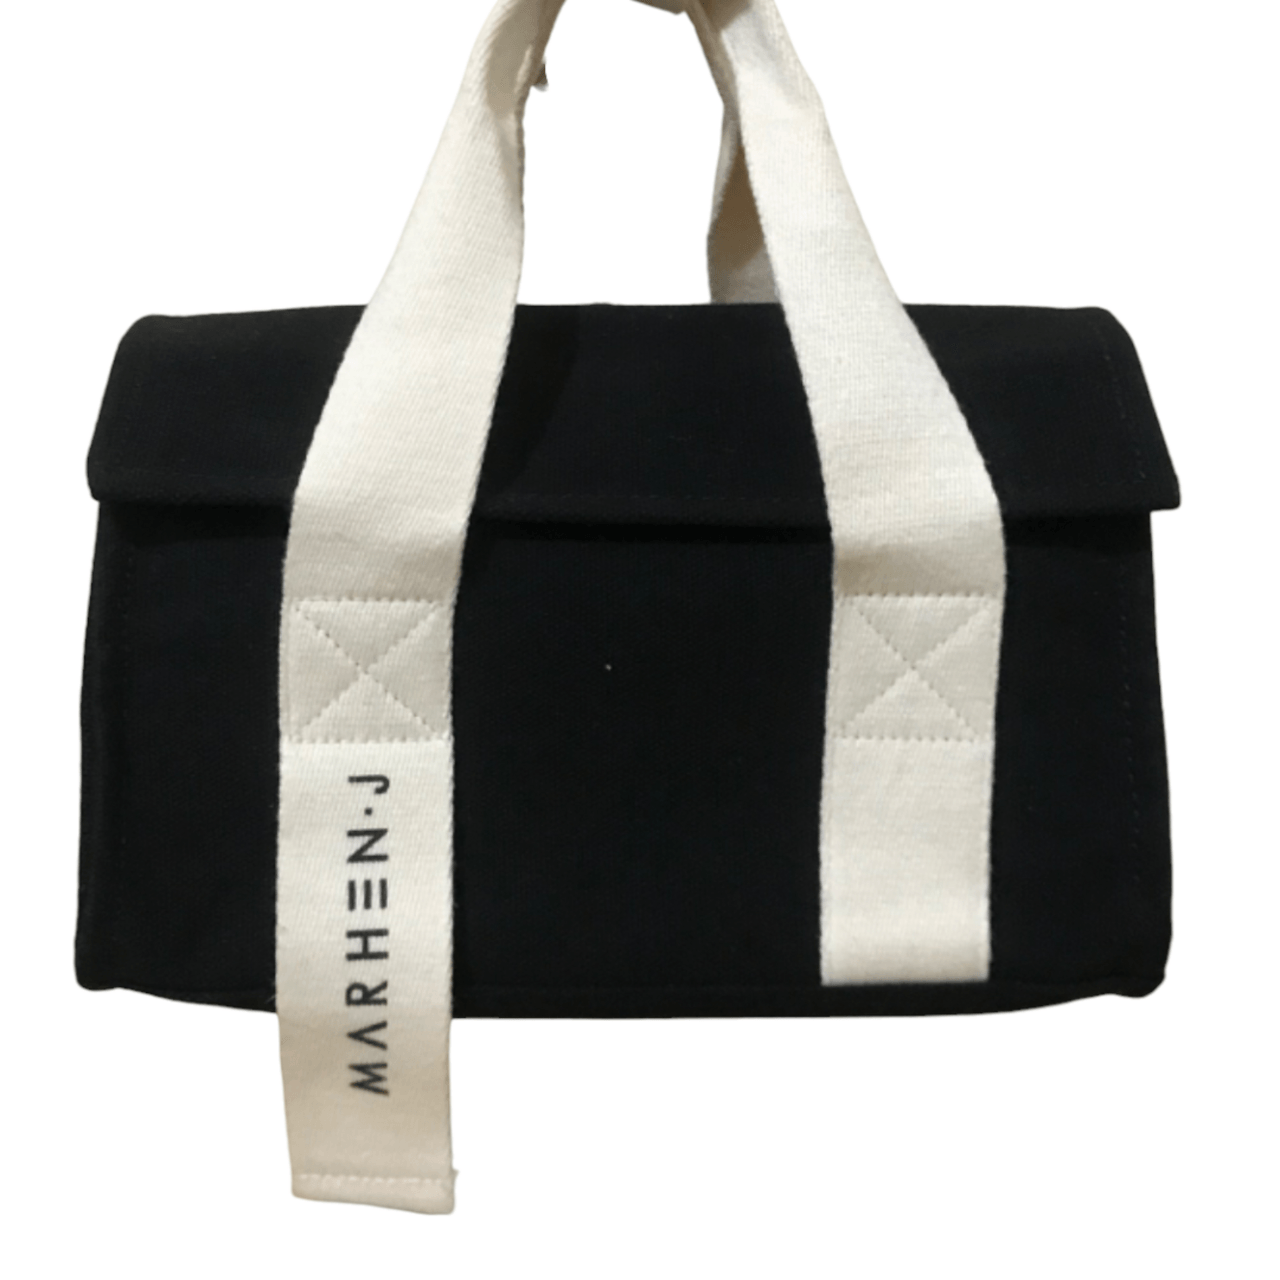 Marhen J Black & White Sling Bag